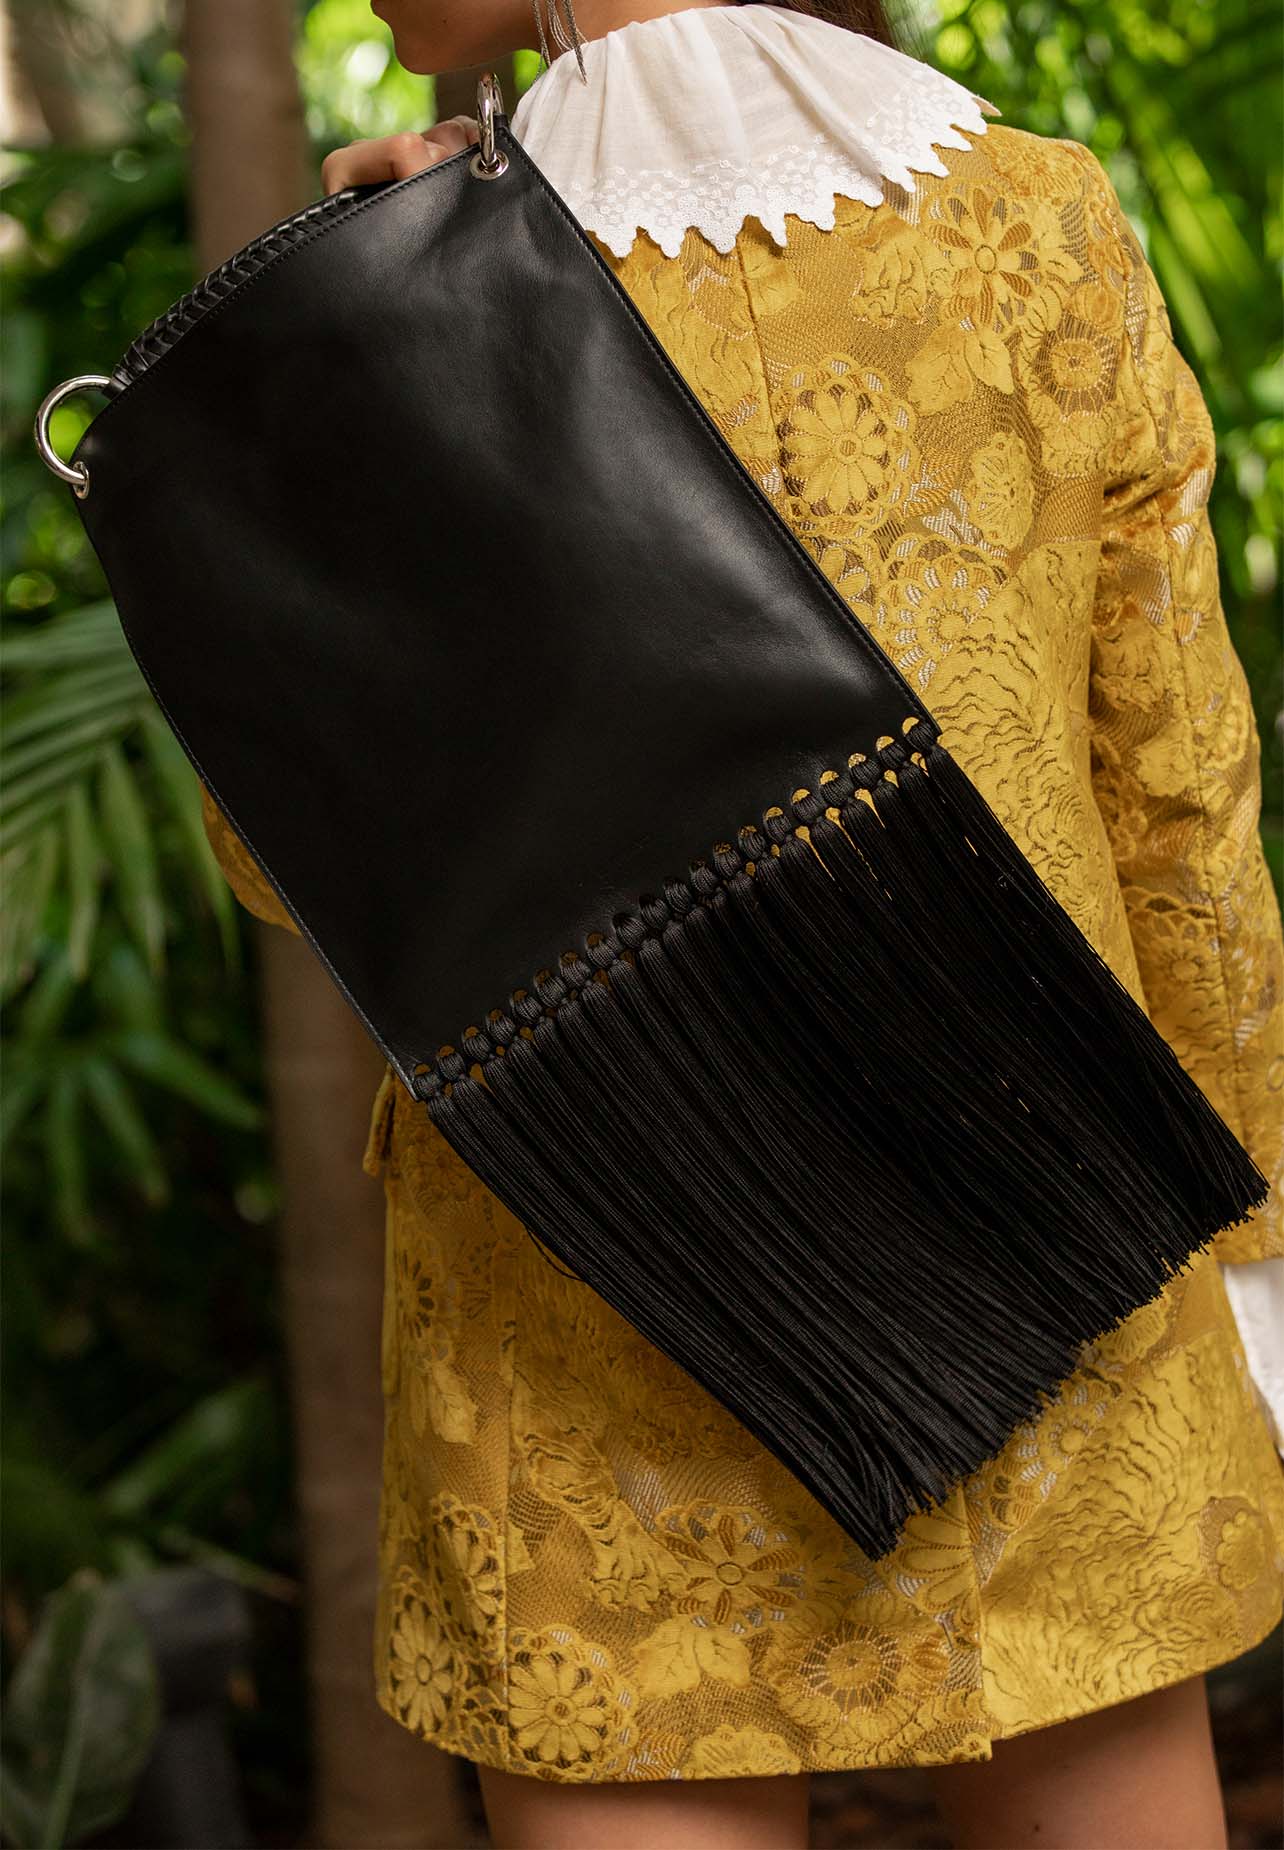 Close up shot of an Etro black leather bag with fringe detailing